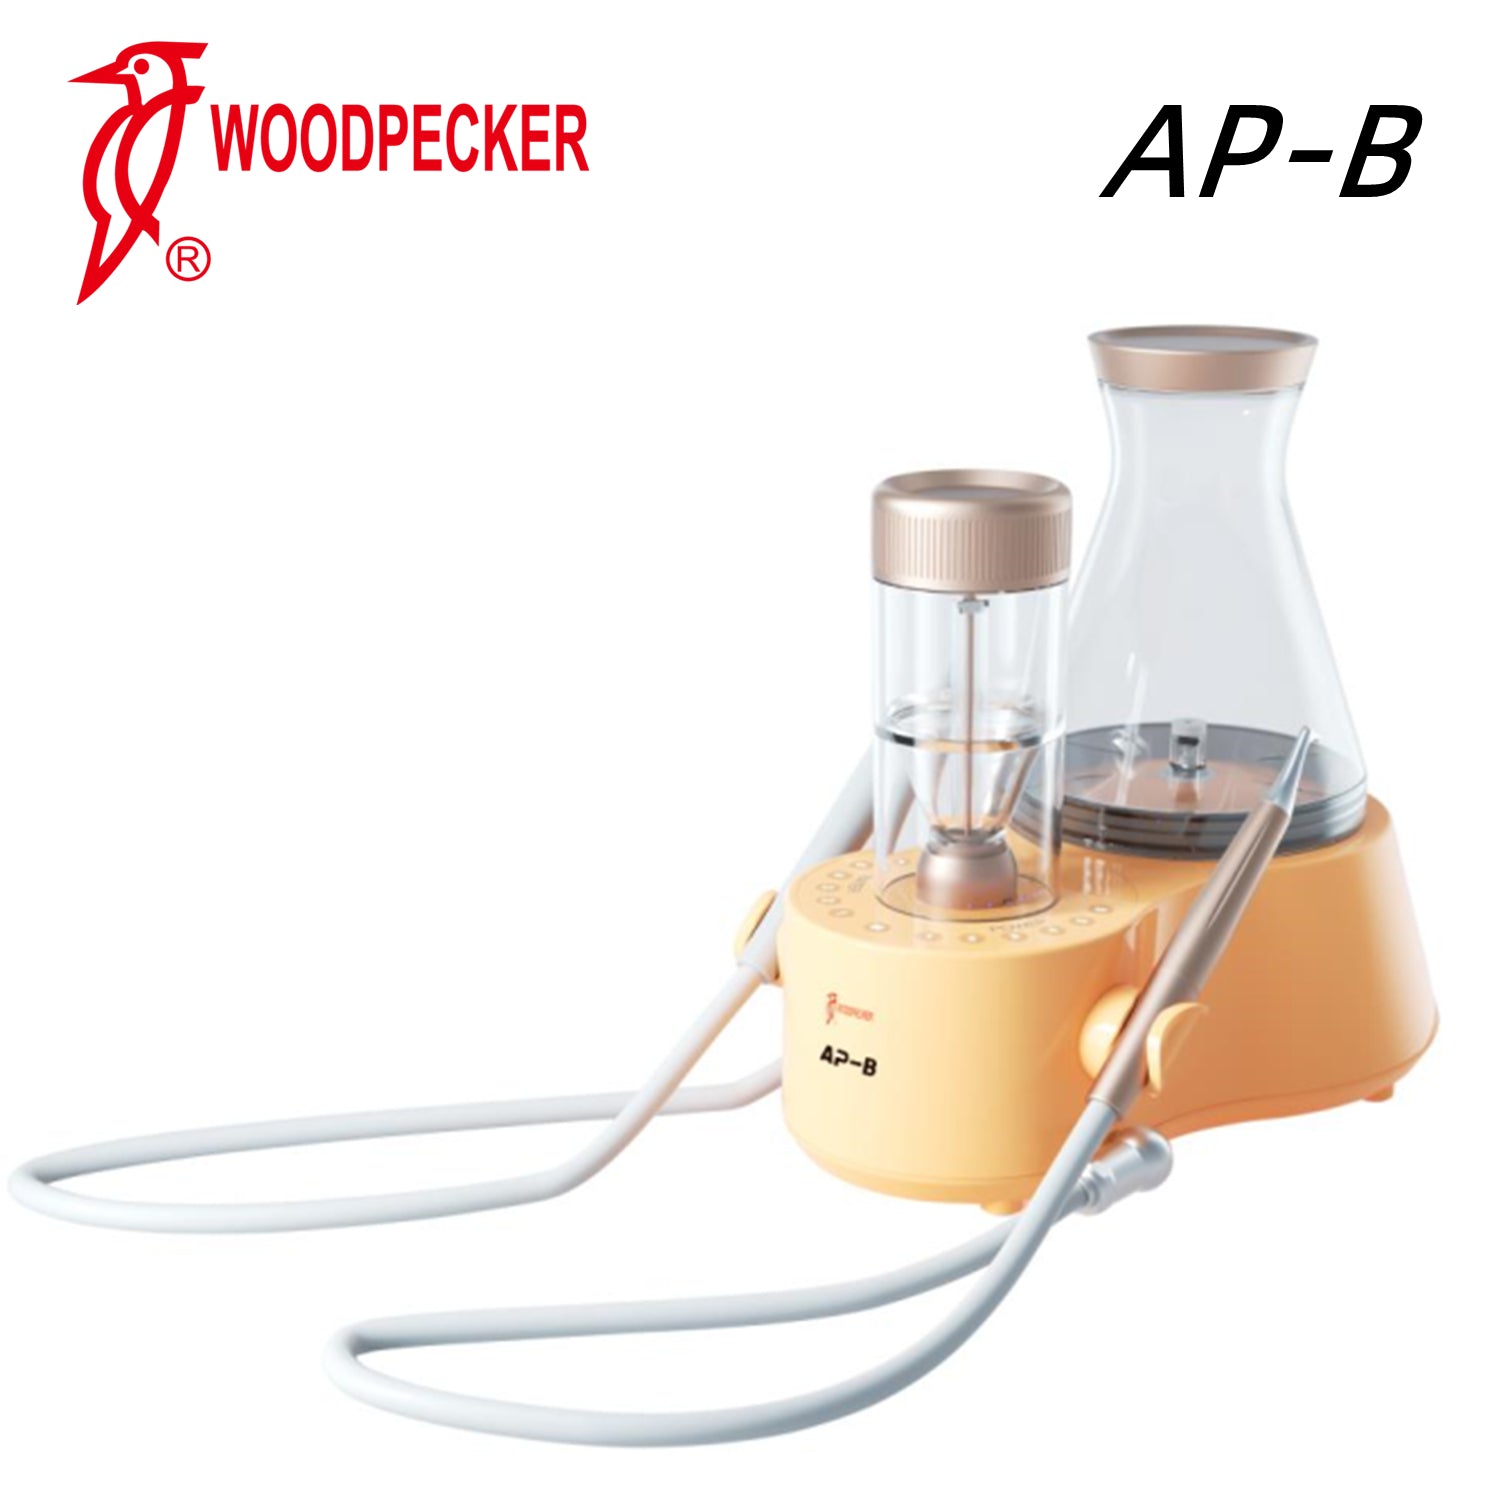 Woodpecker AP-B Air Polisher